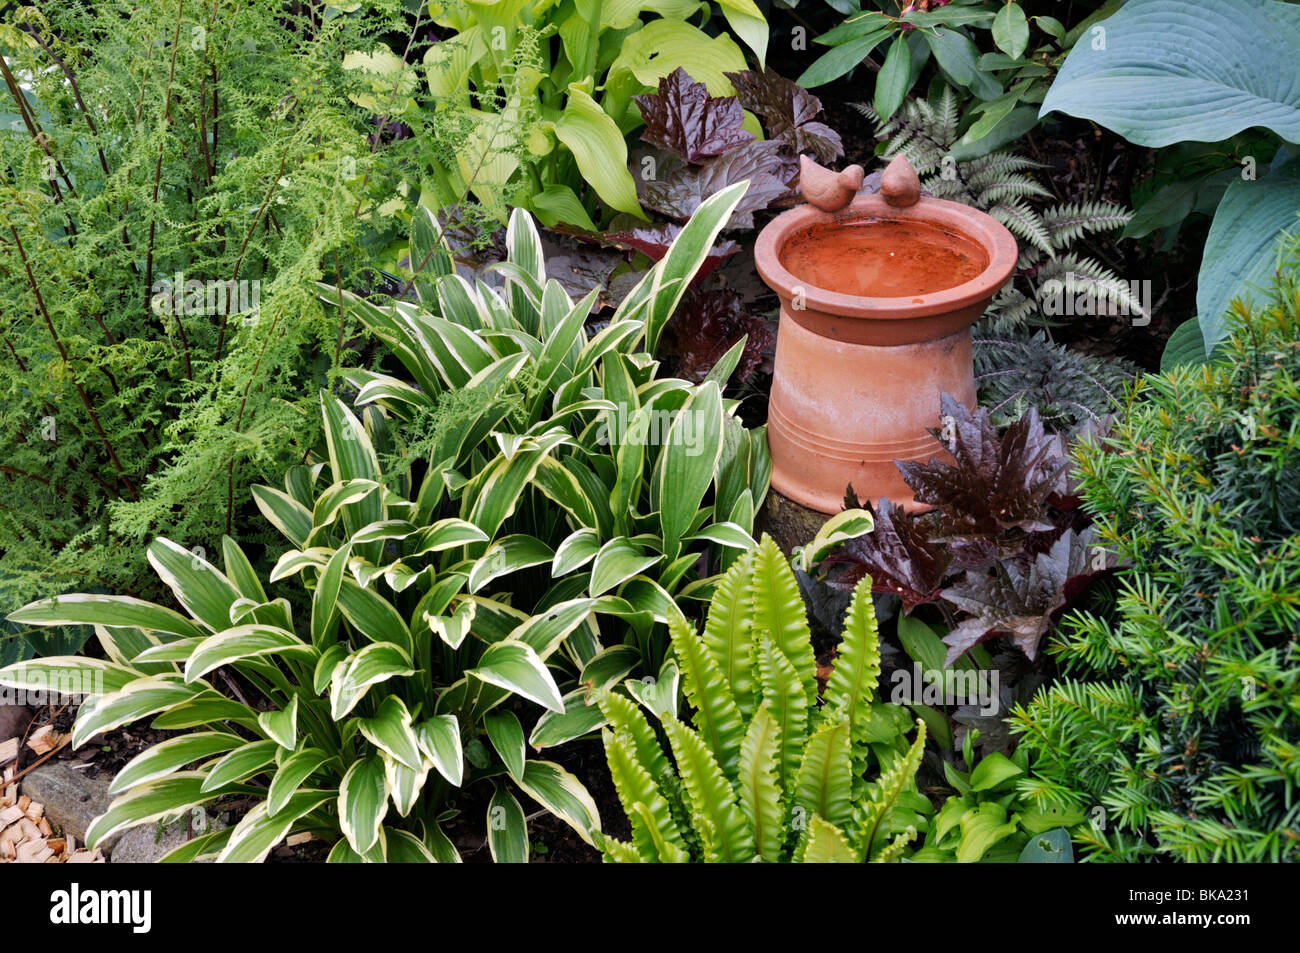 Plantain lilies (Hosta), hart's tongue fern (Asplenium scolopendrium syn. Phyllitis scolopendrium) and alumroots (Heuchera) with bird bath. Design: Stock Photo